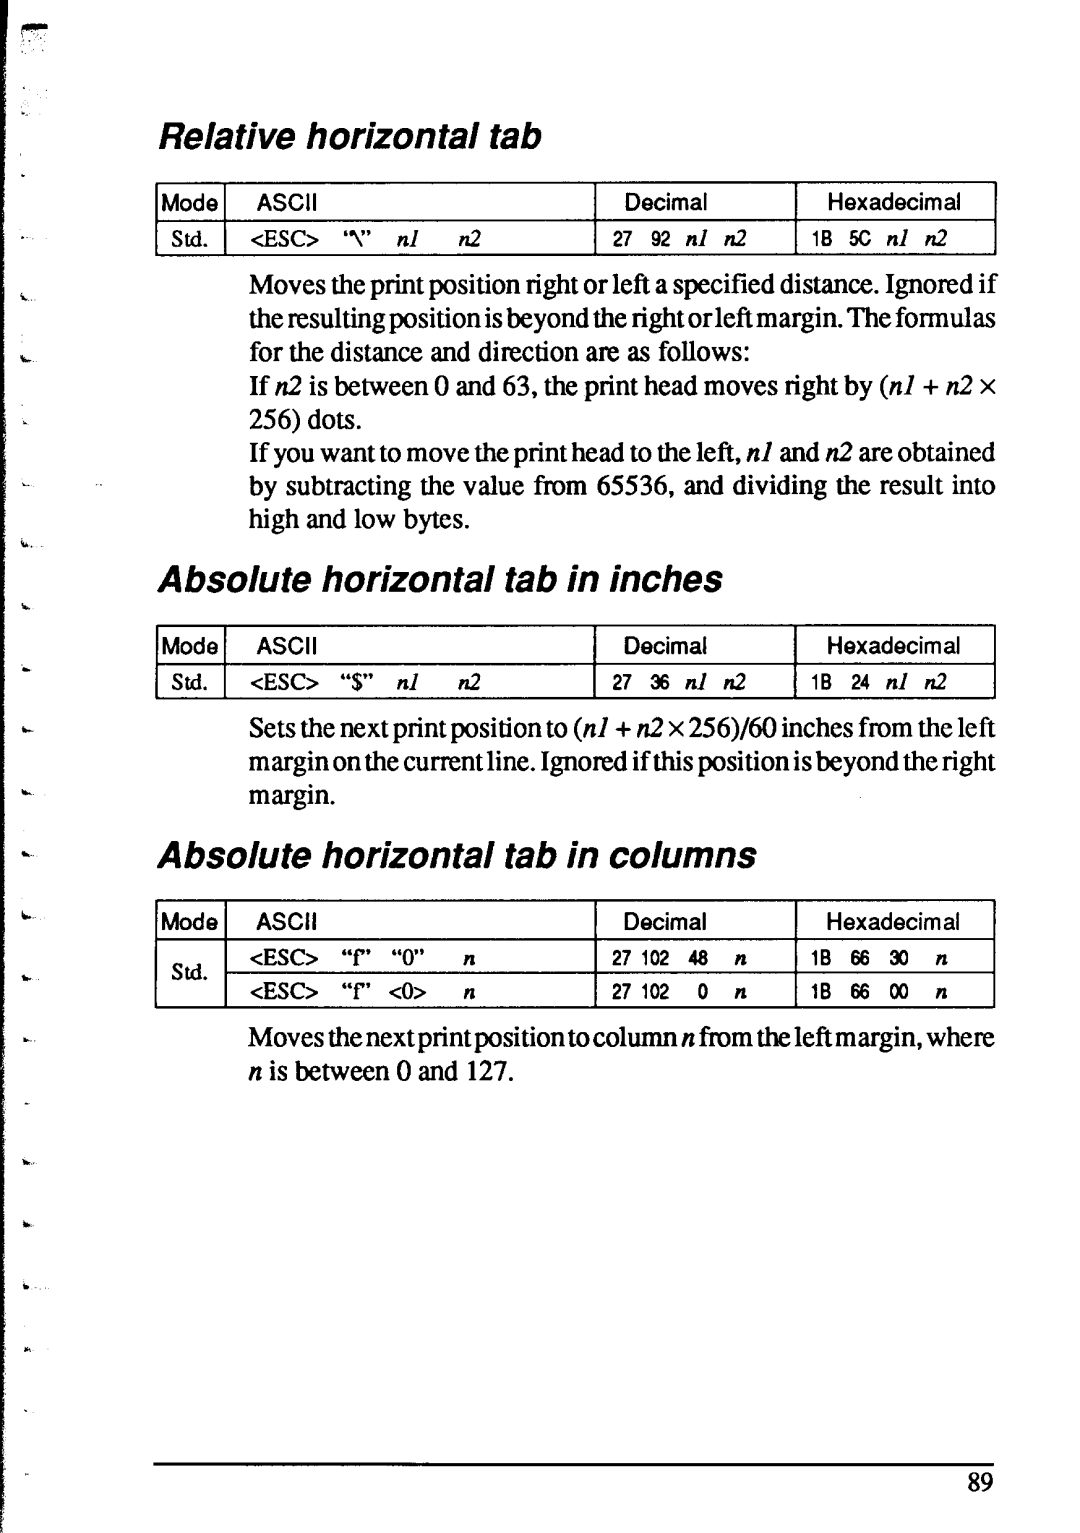 Star Micronics XR-1520 Relative horizontal tab, Absolute horizontal tab in inches, Absolute horizontal tab in columns 